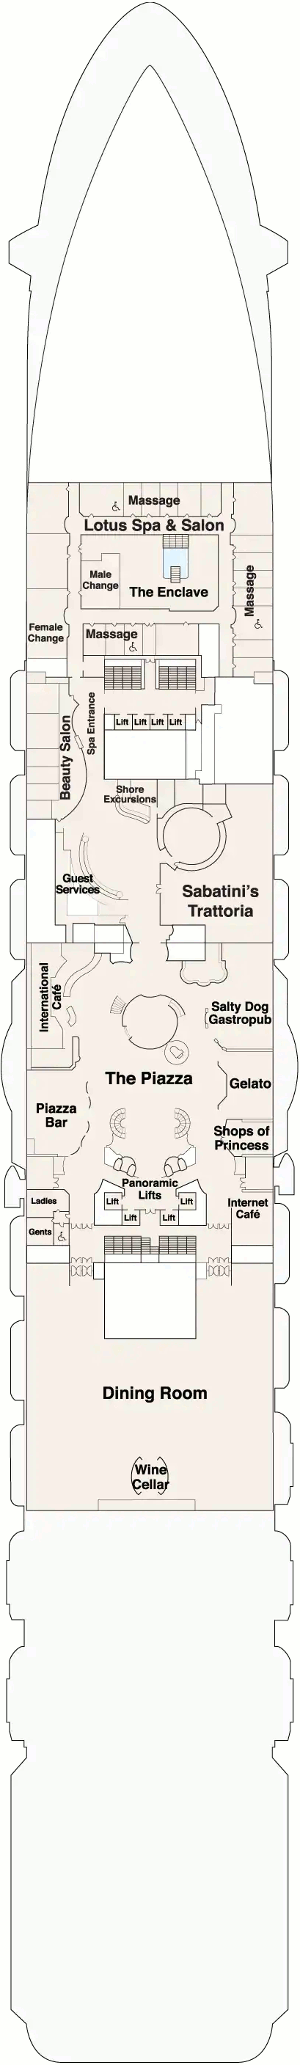 Enchanted Princess Plaza Deck Plan